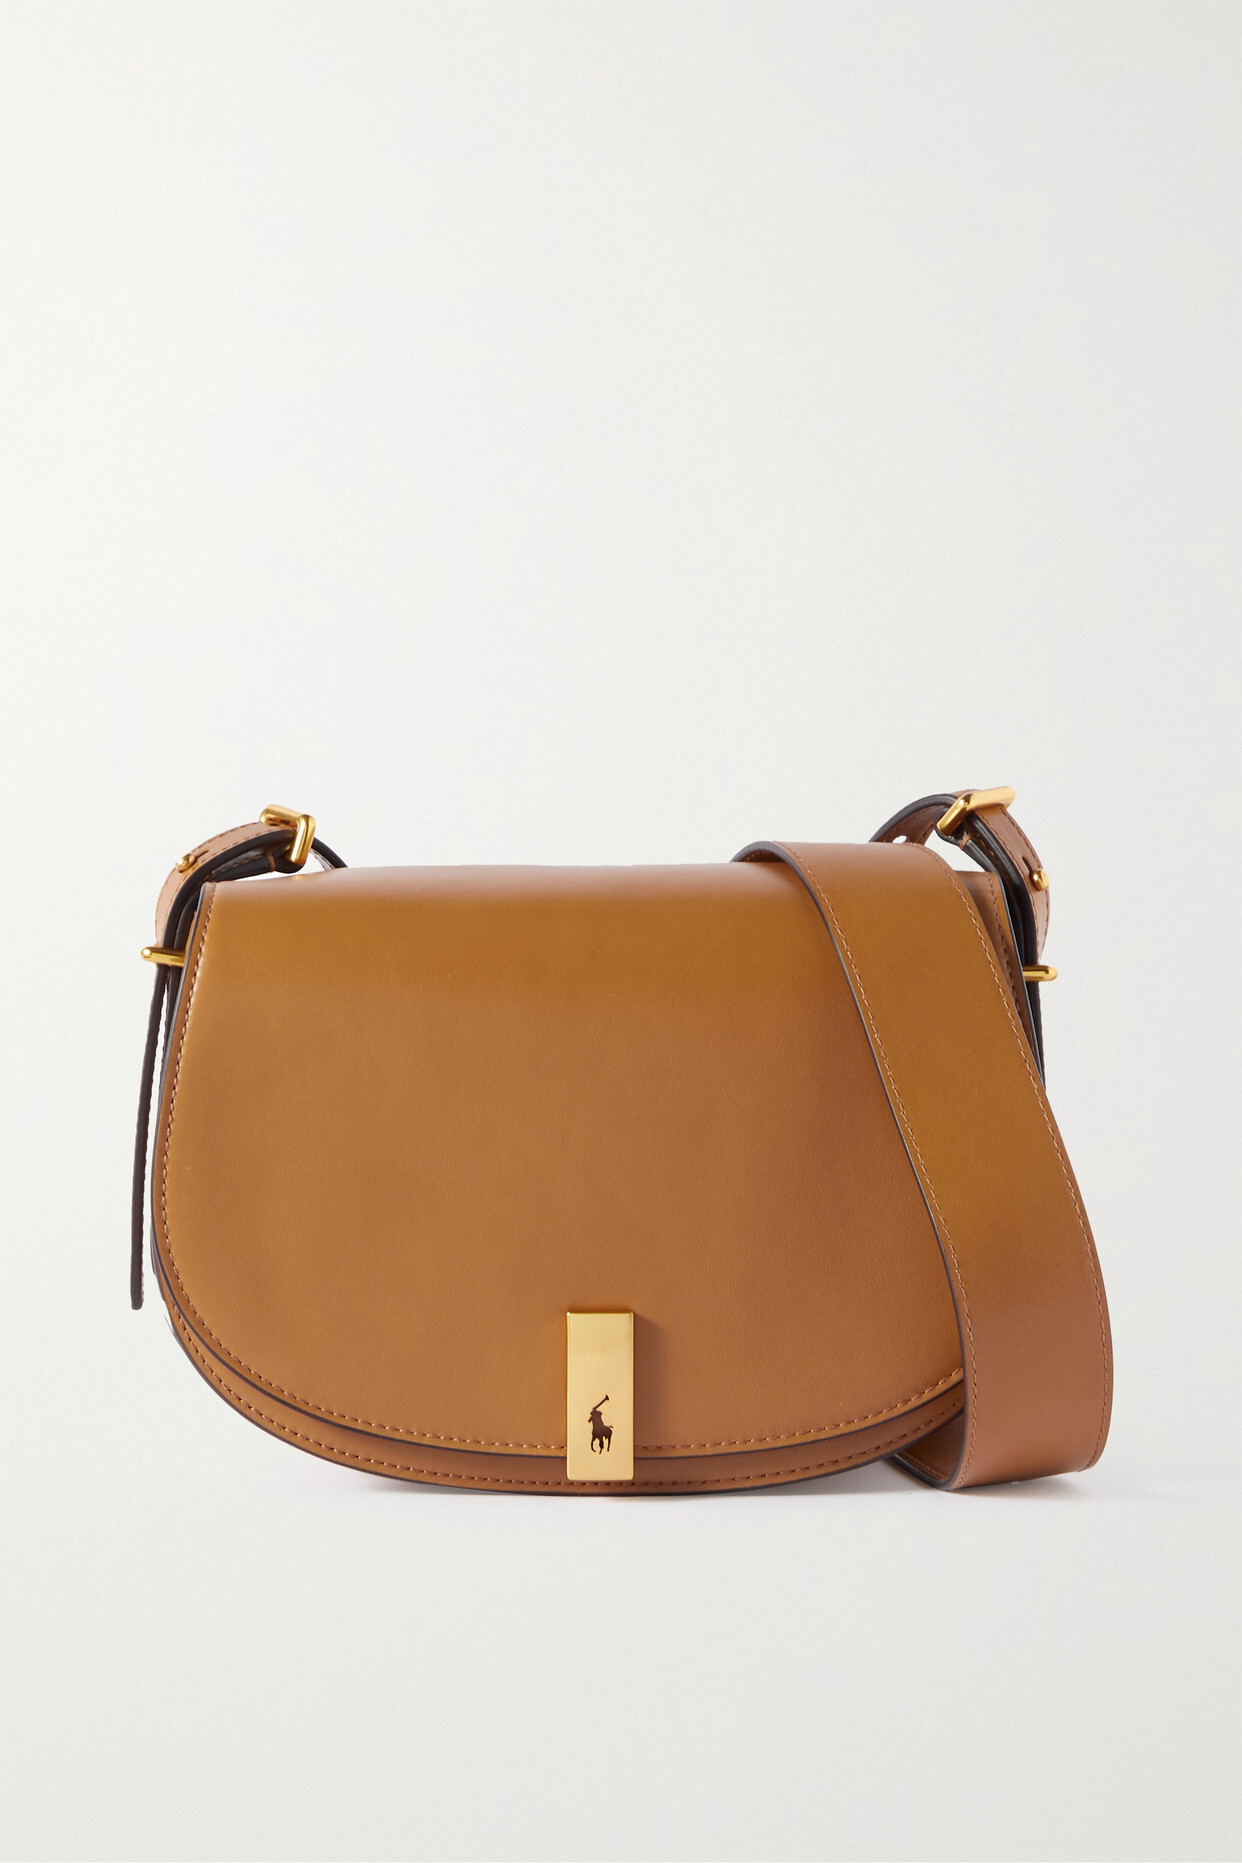 Polo Ralph Lauren - Polo Id Medium Leather Shoulder Bag - Brown